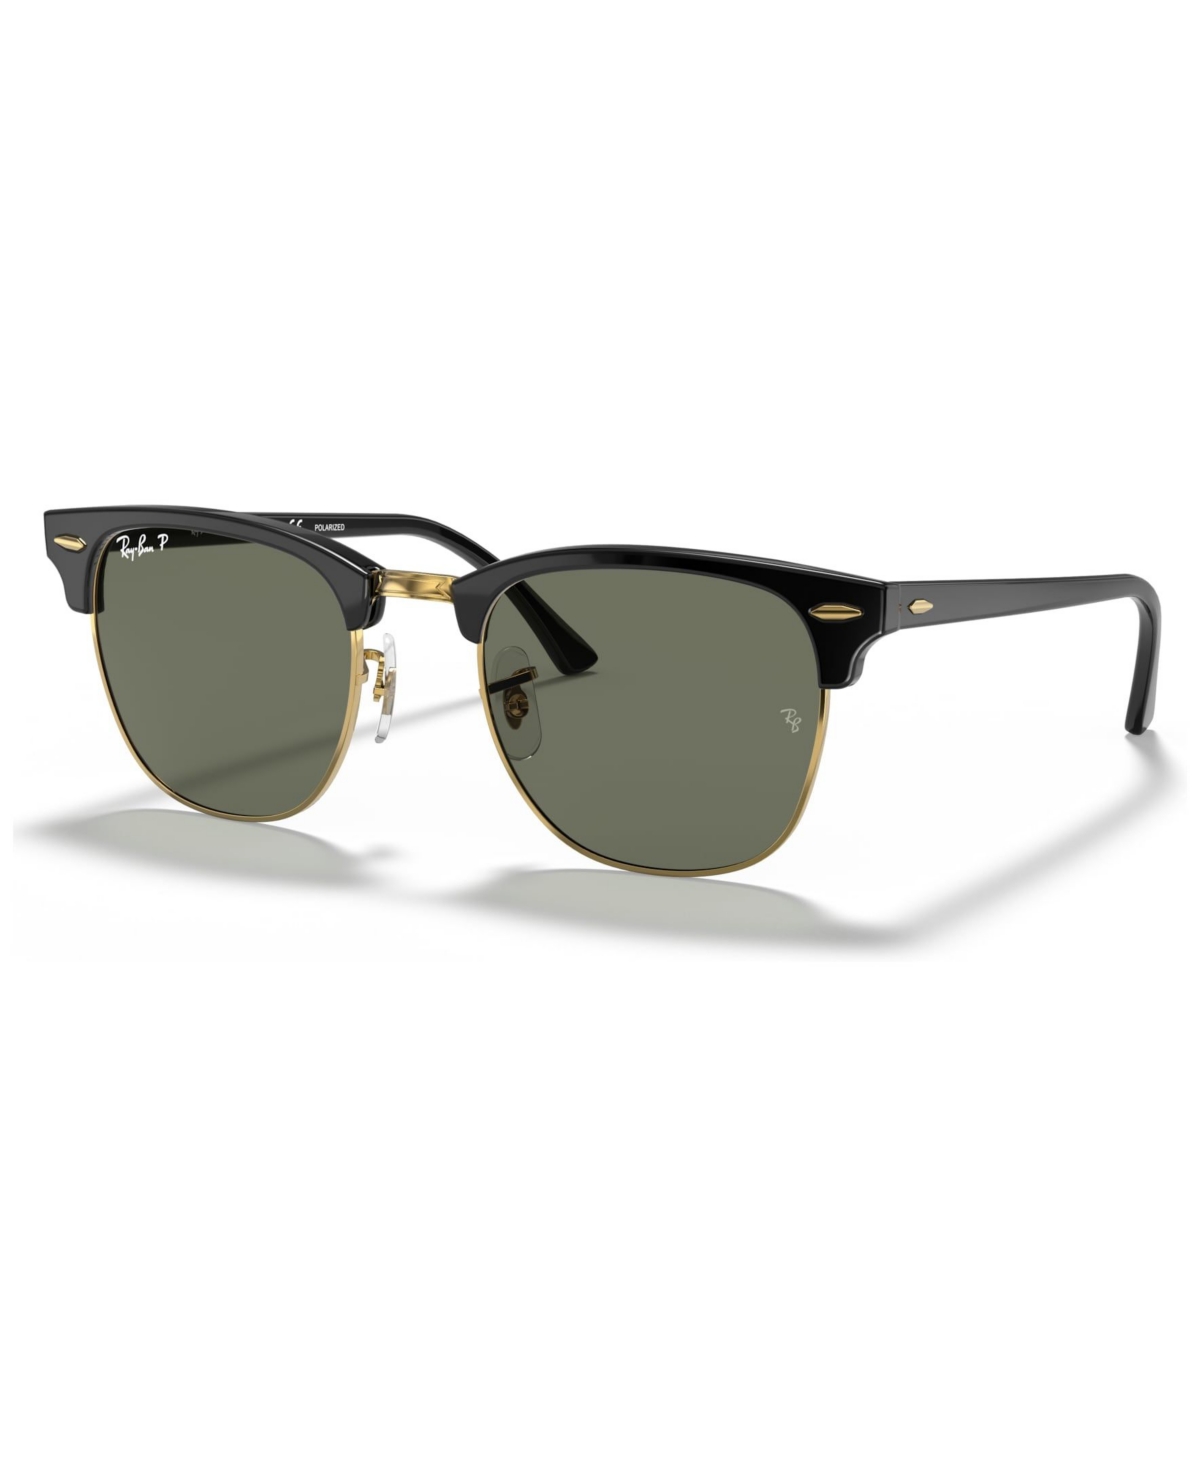 Ray Ban Rb3016 - Clubmaster Sole W0365 Sunglasses In Green Mirror Polar,black